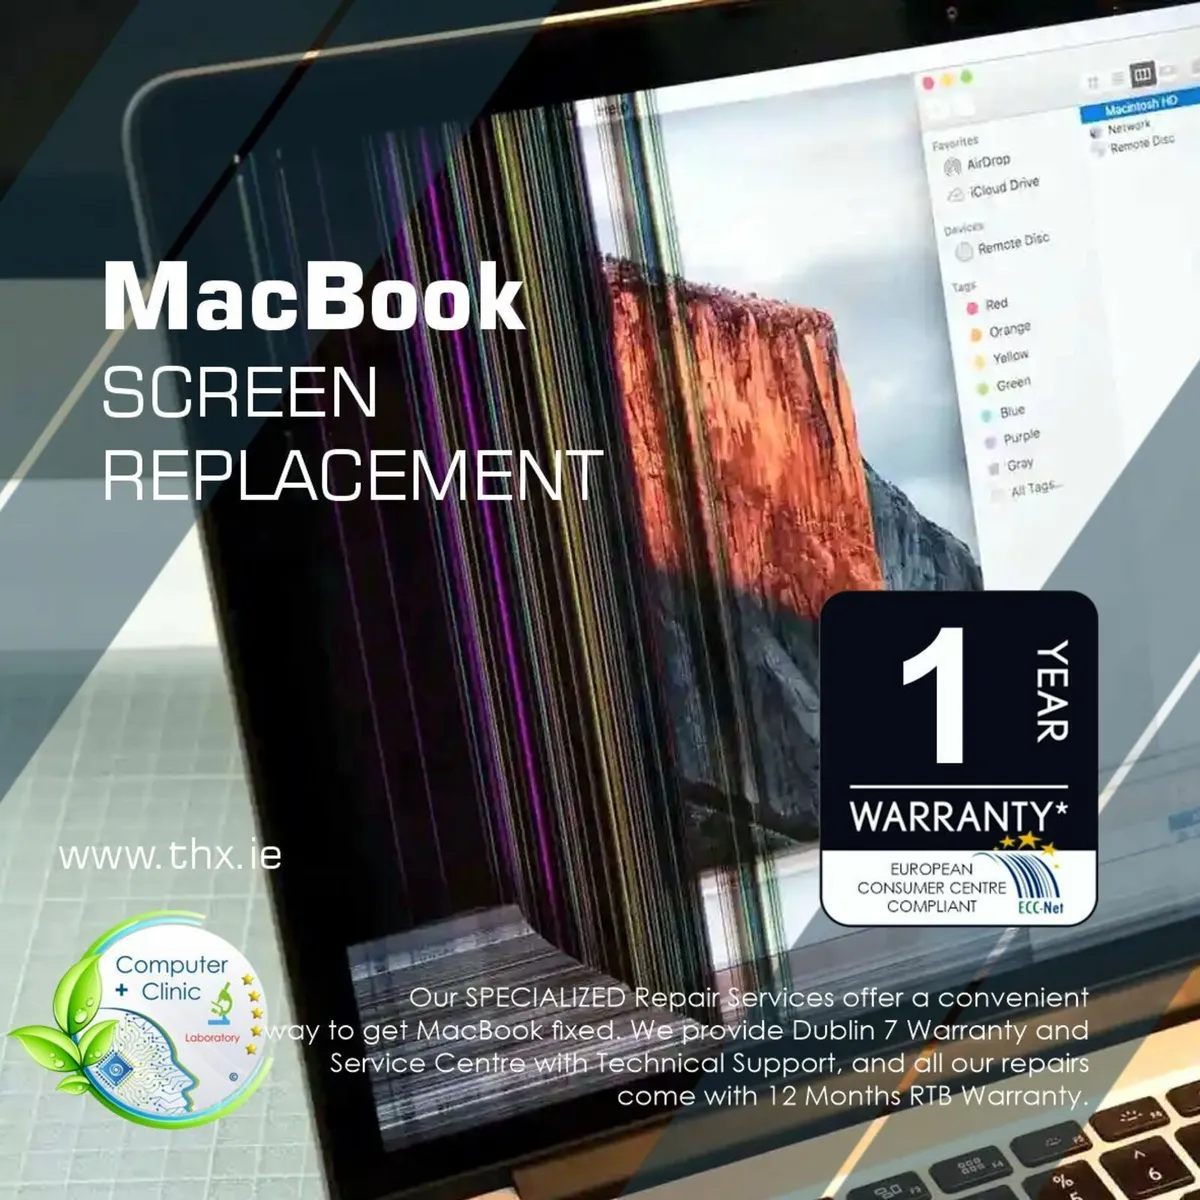 MacBook Repairs》FREE ASSESSMENT & 1 YEAR WARRANTY - Image 1